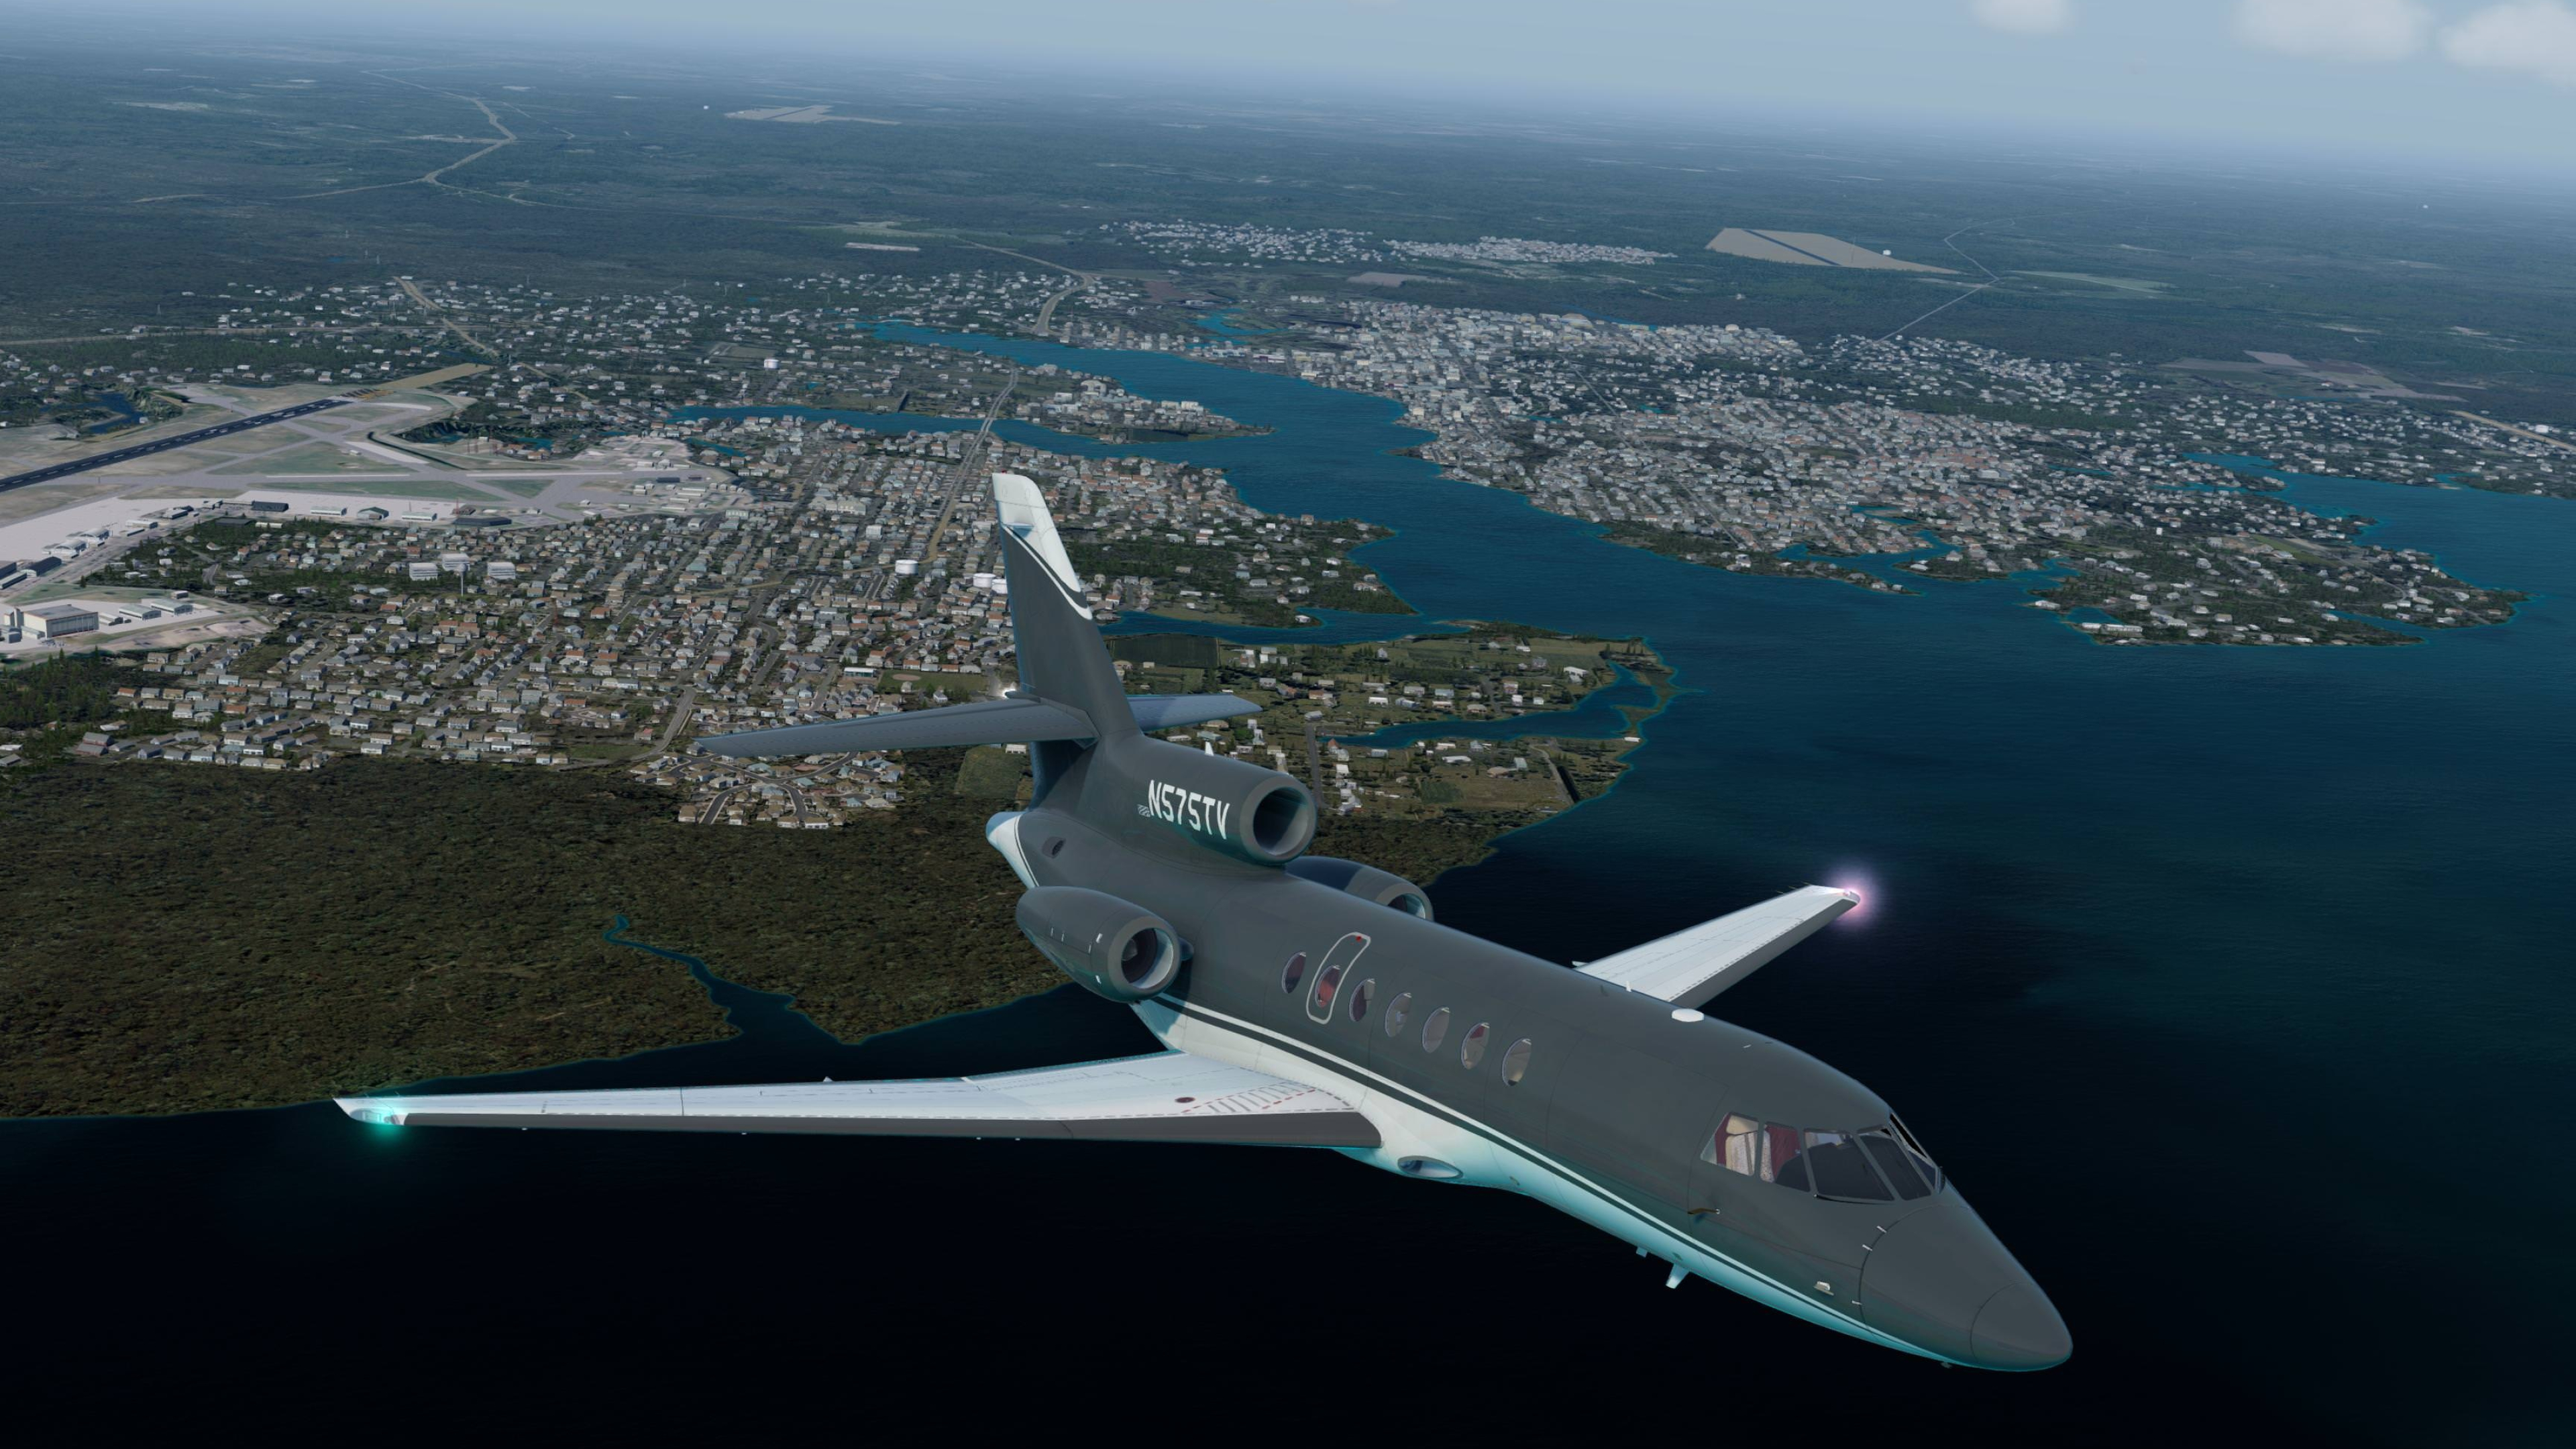 Dassault Falcon 50 travels, Flysimware simulation, Flight simulation enthusiast, Authentic flight experience, 3840x2160 4K Desktop